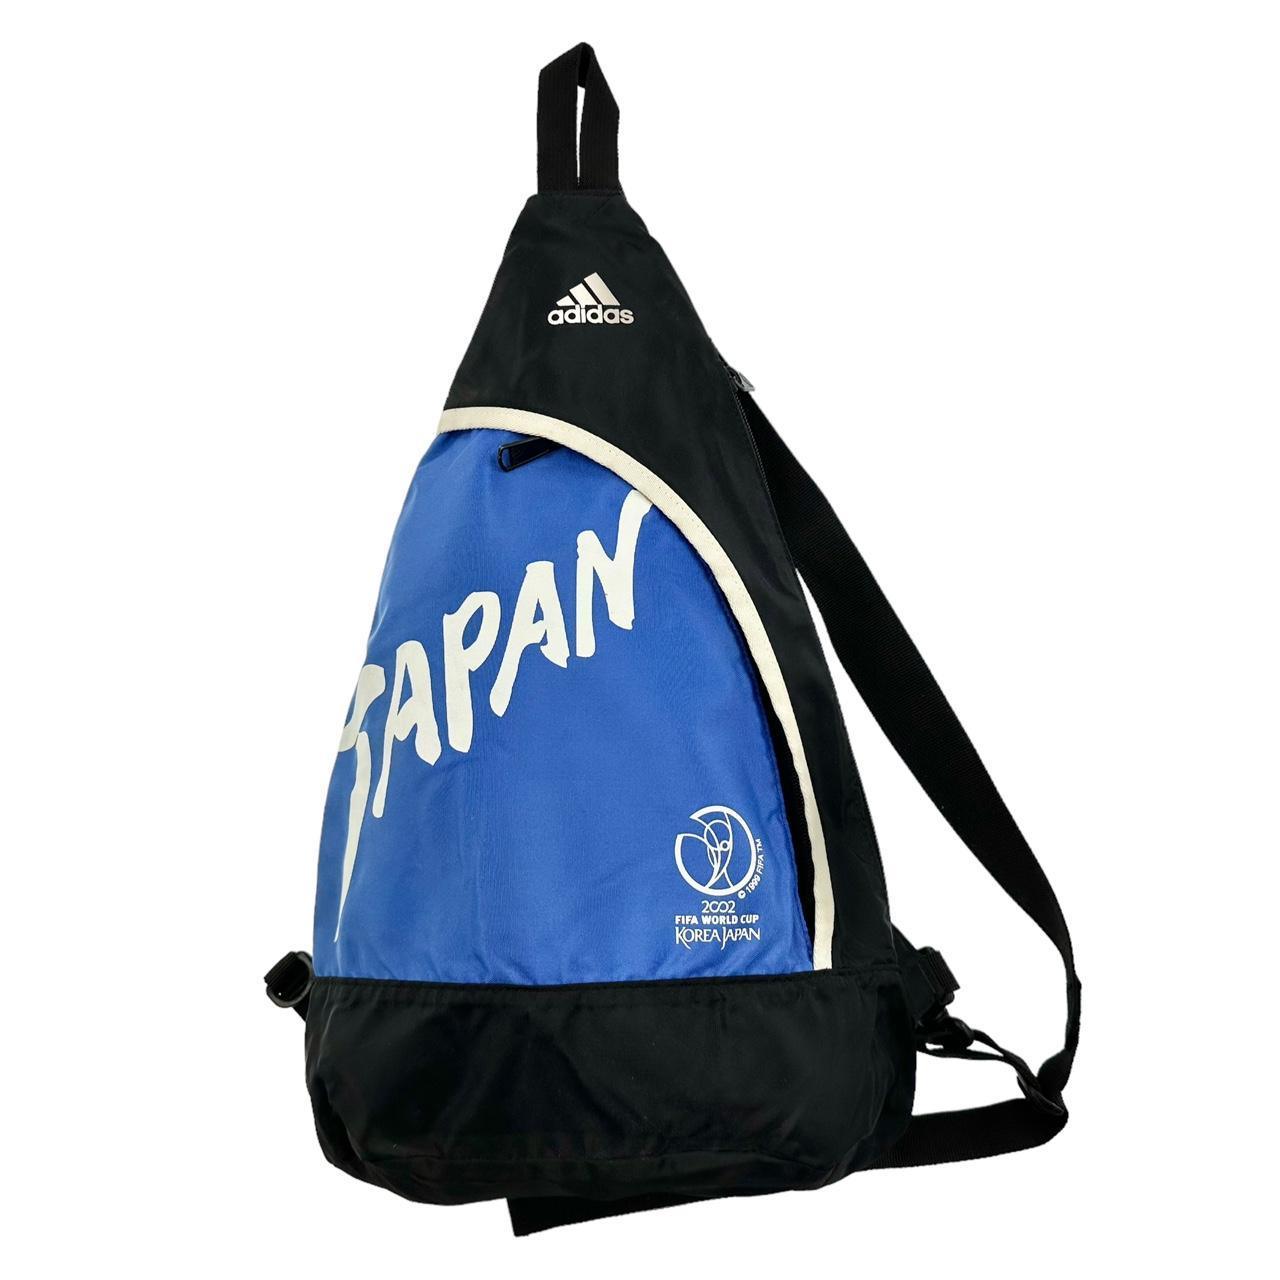 Vintage Adidas Japan World Cup Sling bag - Known Source